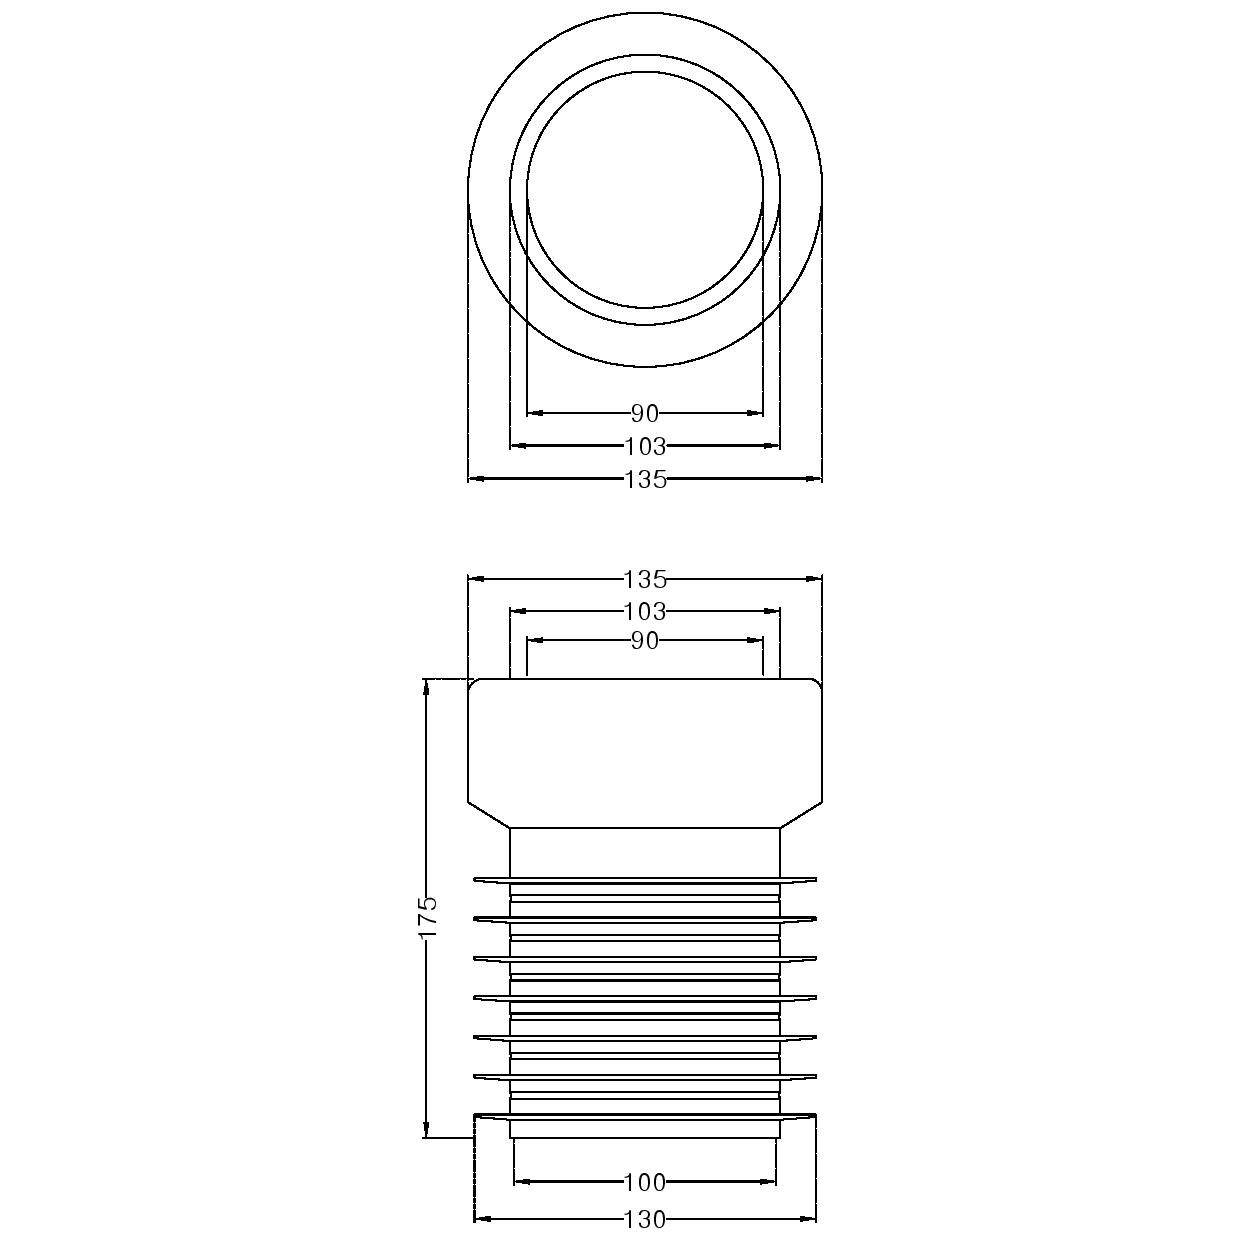 GIUNTI PROLUNGATI IN PVC P/SCARICHI WC mm.110-125 